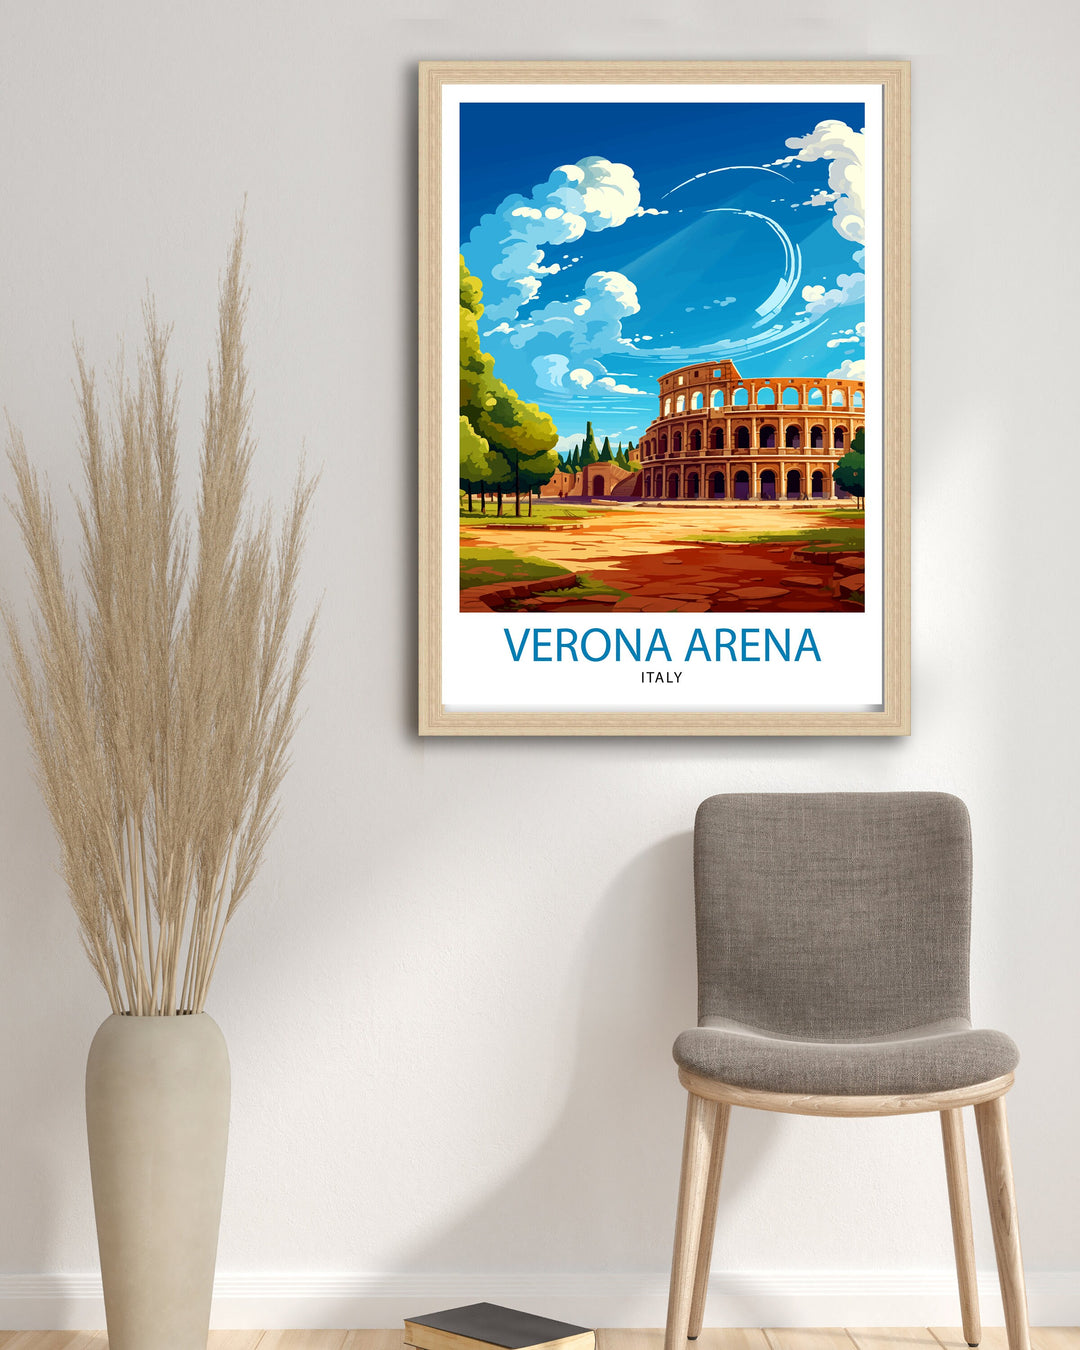 Verona's Arena Rome Travel Poster Verona Wall Decor Verona Poster Rome Travel Posters Verona's Arena Art Poster Verona's Arena Illustration